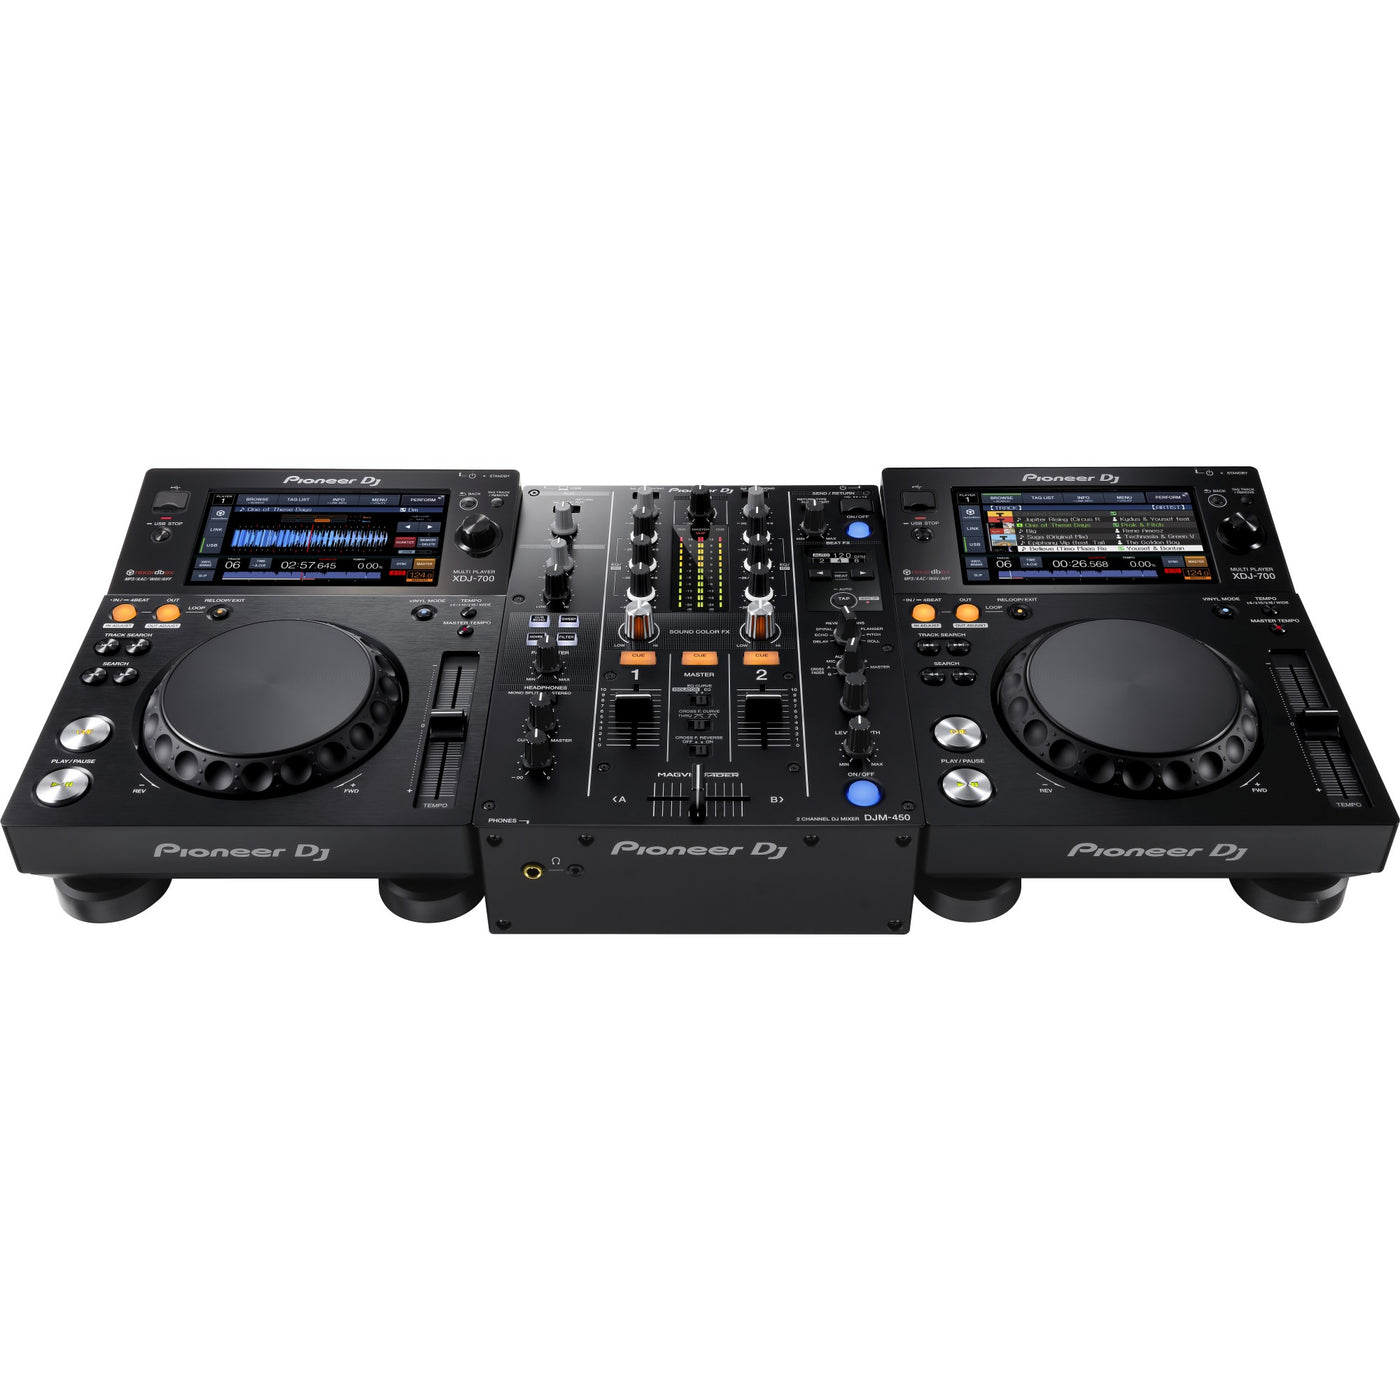 Pioneer DJ XDJ-700 Compact DJ Multi-Player, Professional Mixer Audio Equipment